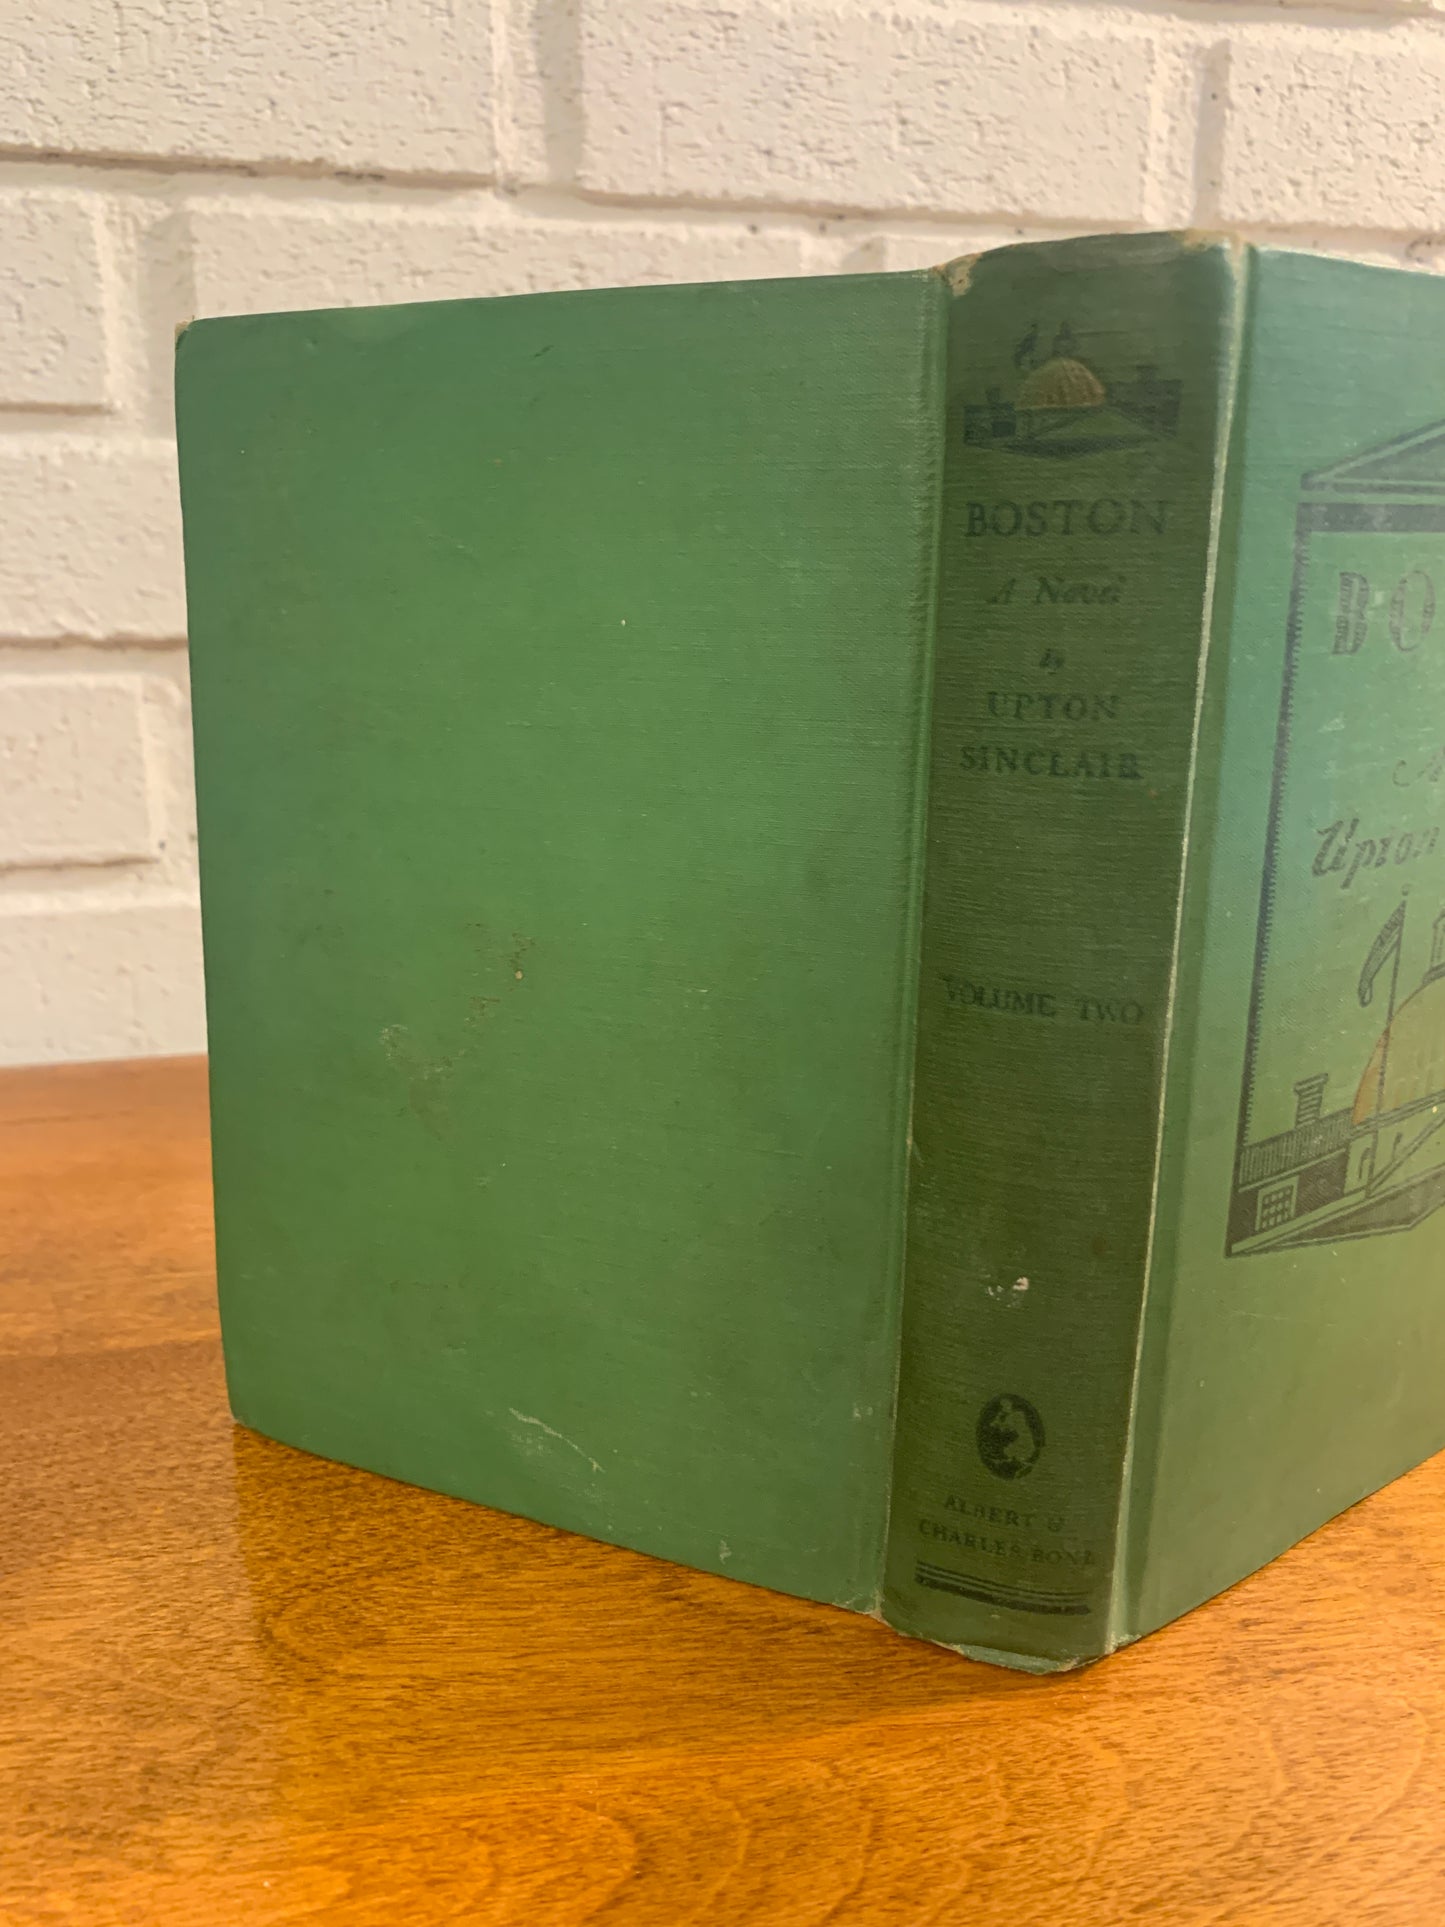 Boston Volume 2 by Upton Sinclair 1928